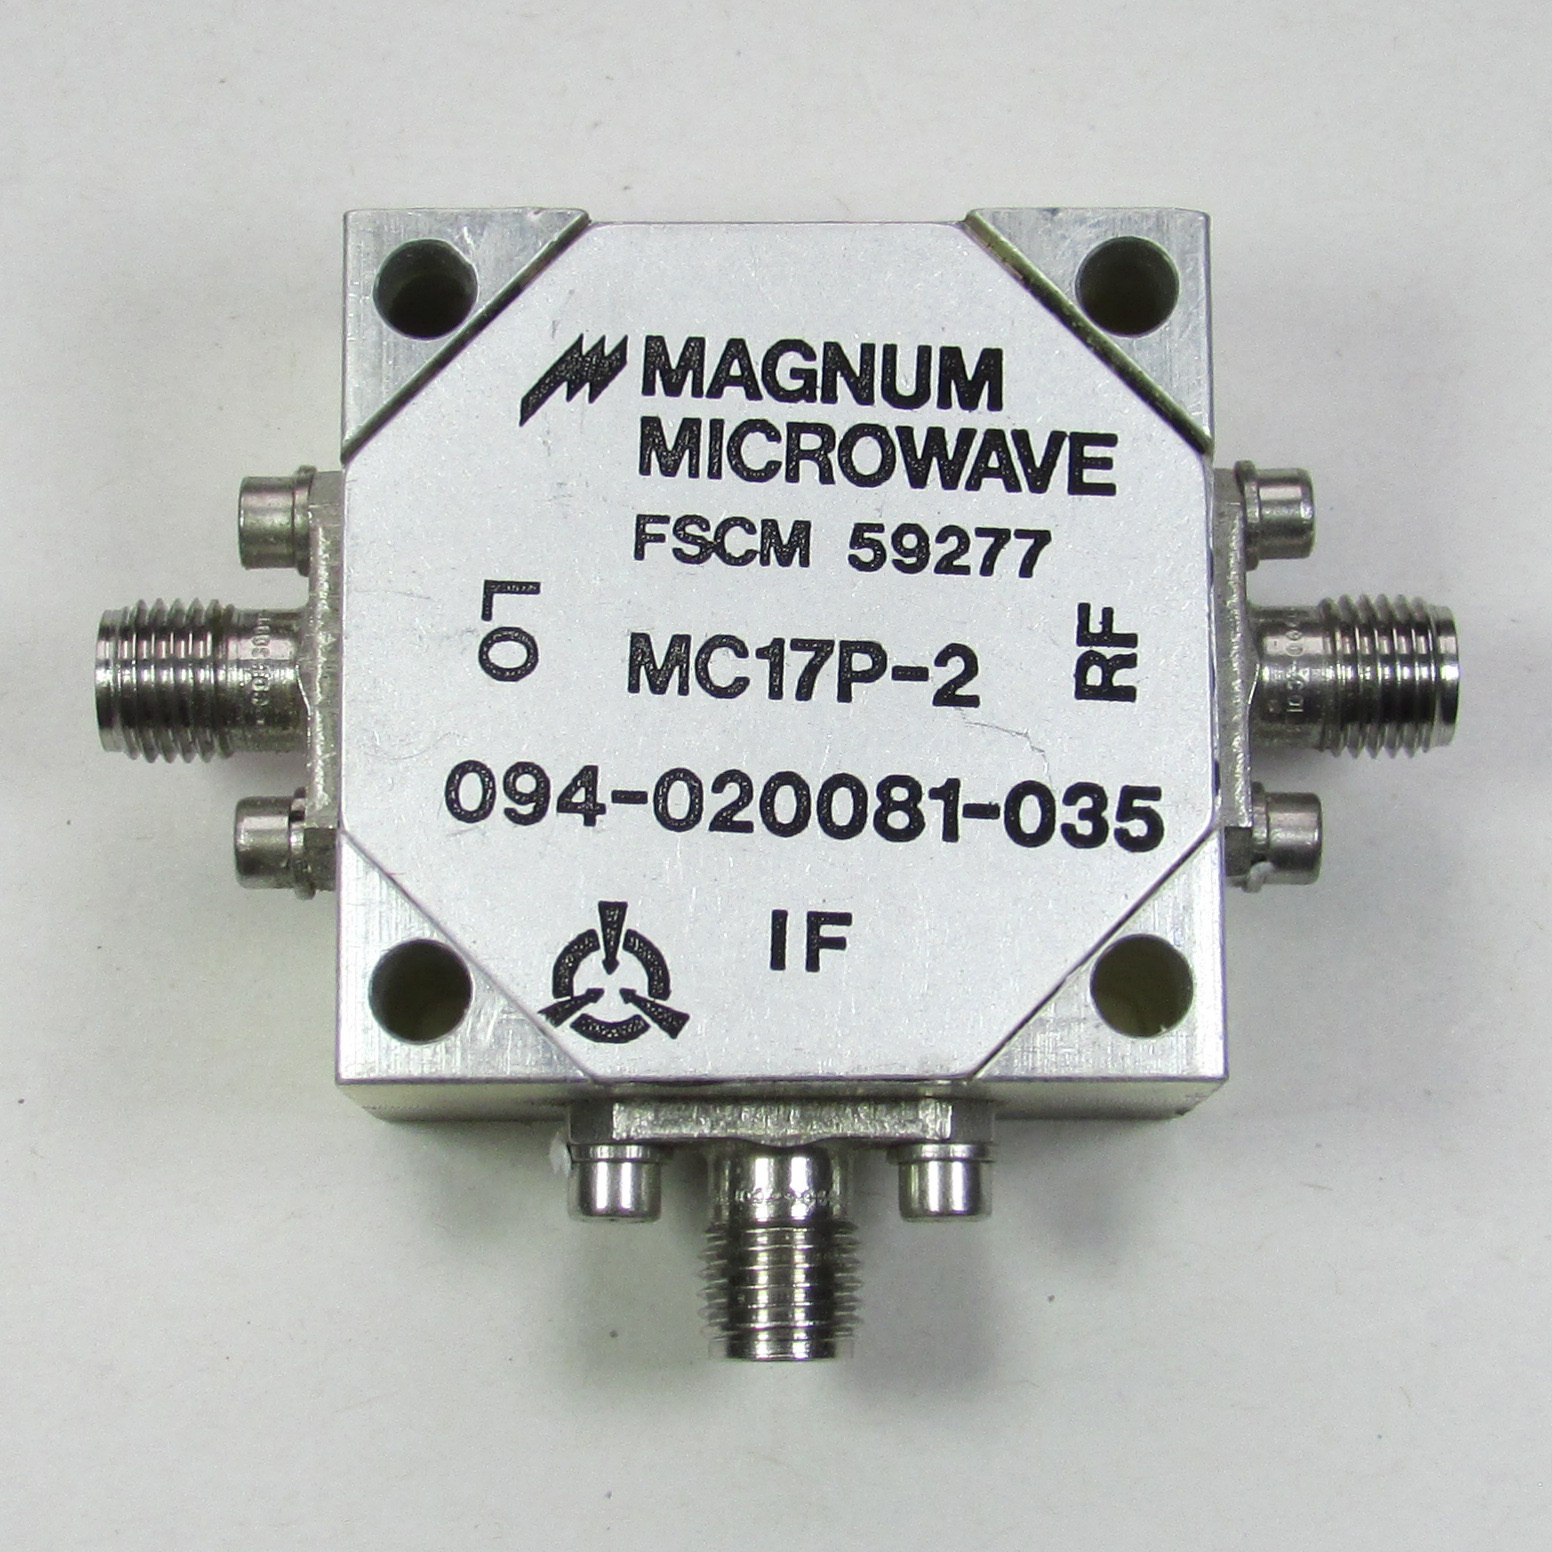 MAGNUM MC17P-2 1-5GHz SMA Double Balanced Mixer